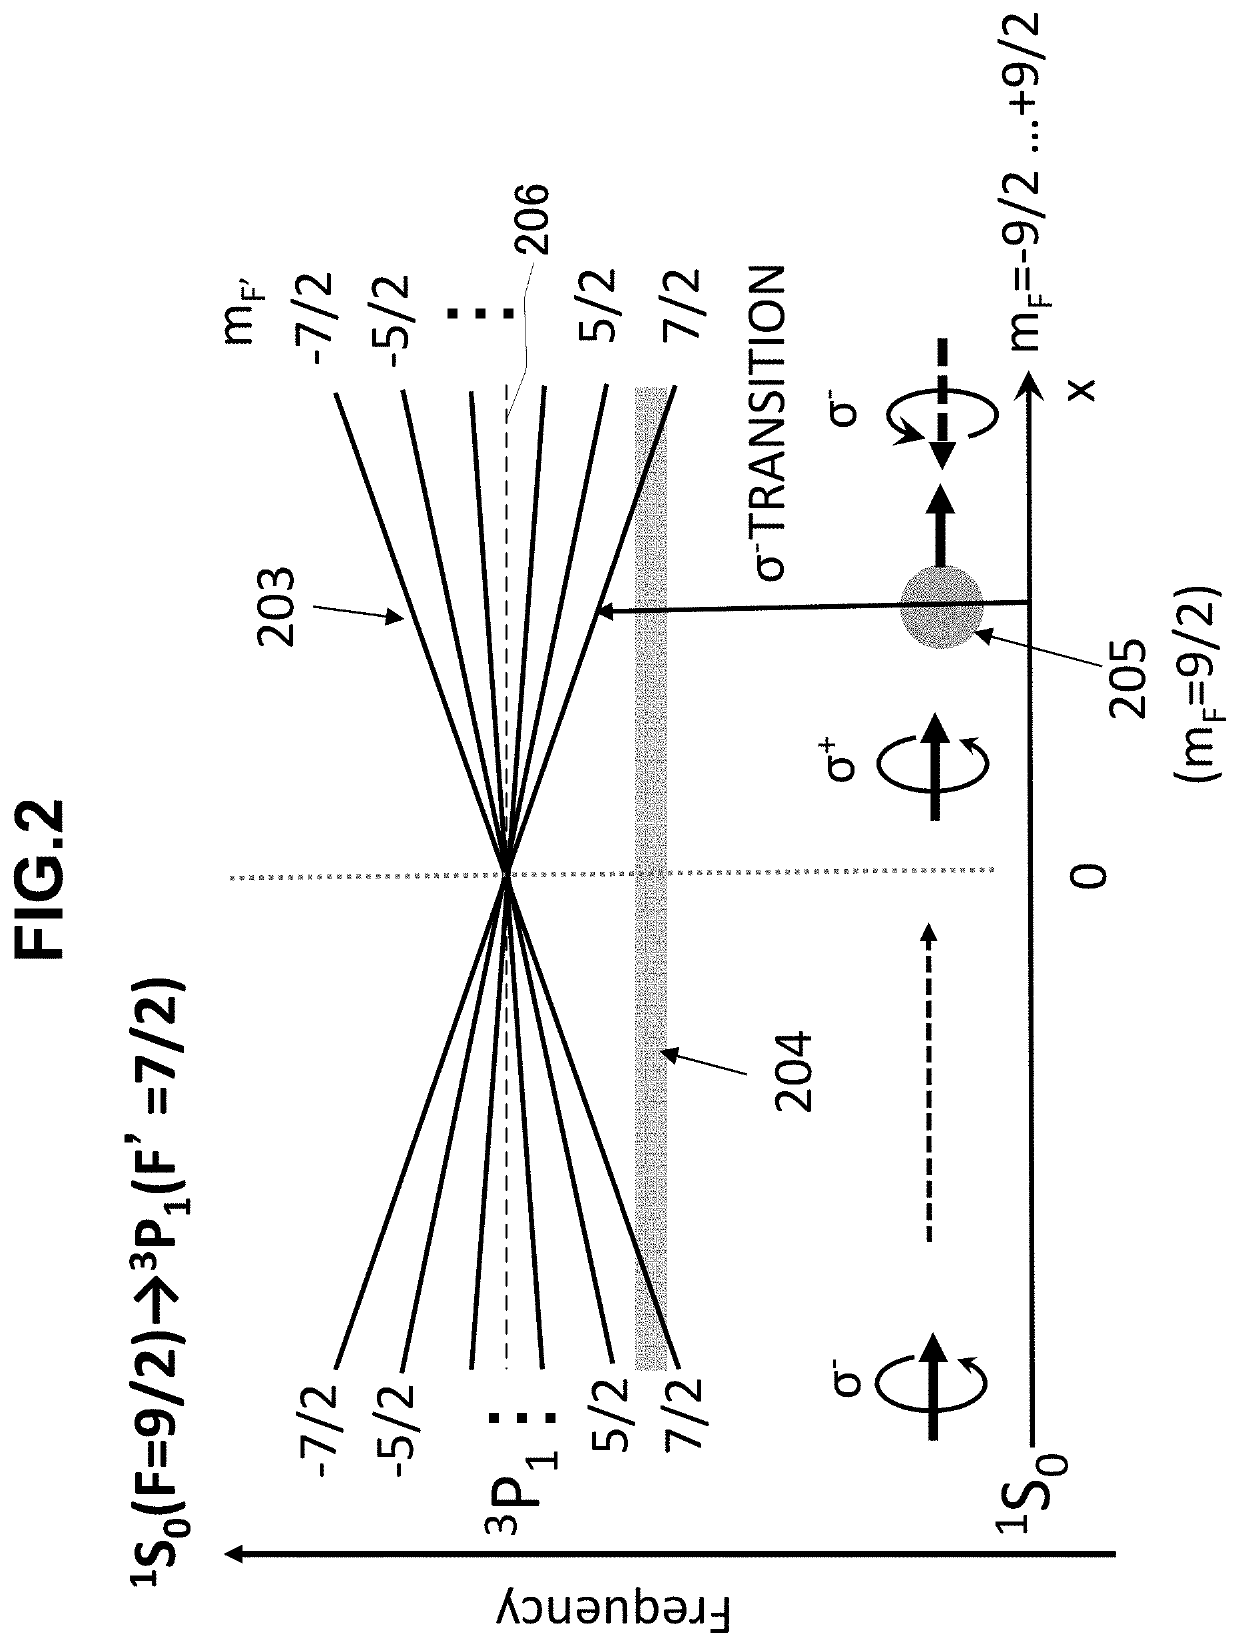 Magneto-optical trap method and apparatus